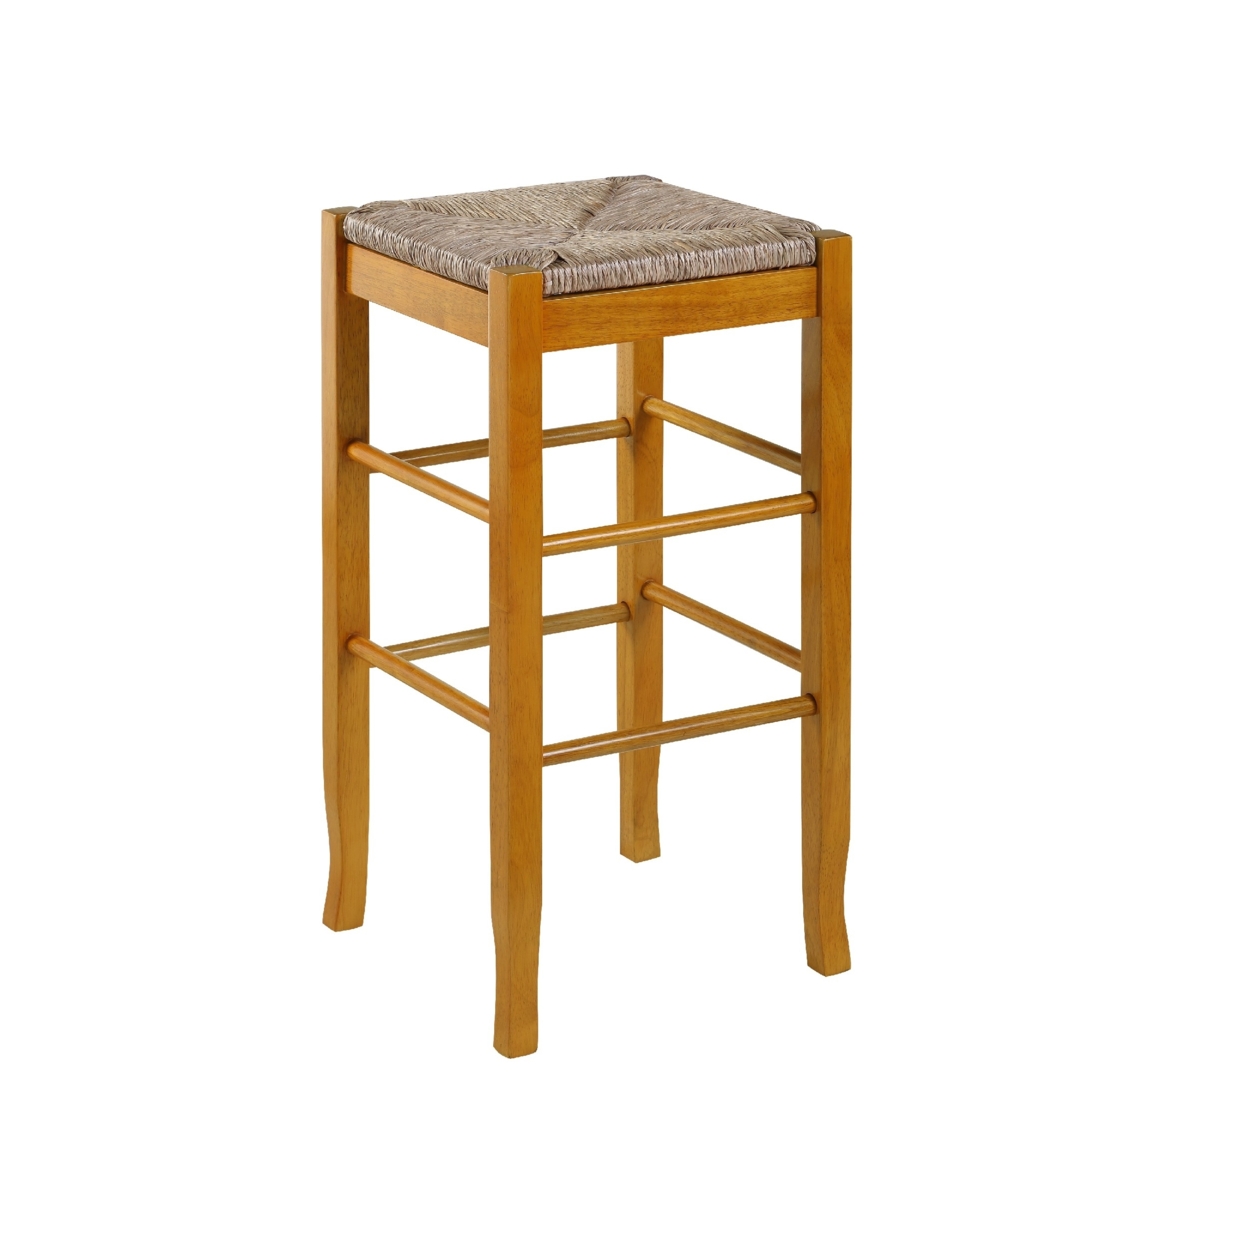 Chris 29 Inch Barstool With Wood Frame, Handwoven Rush Seat, Oak Brown- Saltoro Sherpi